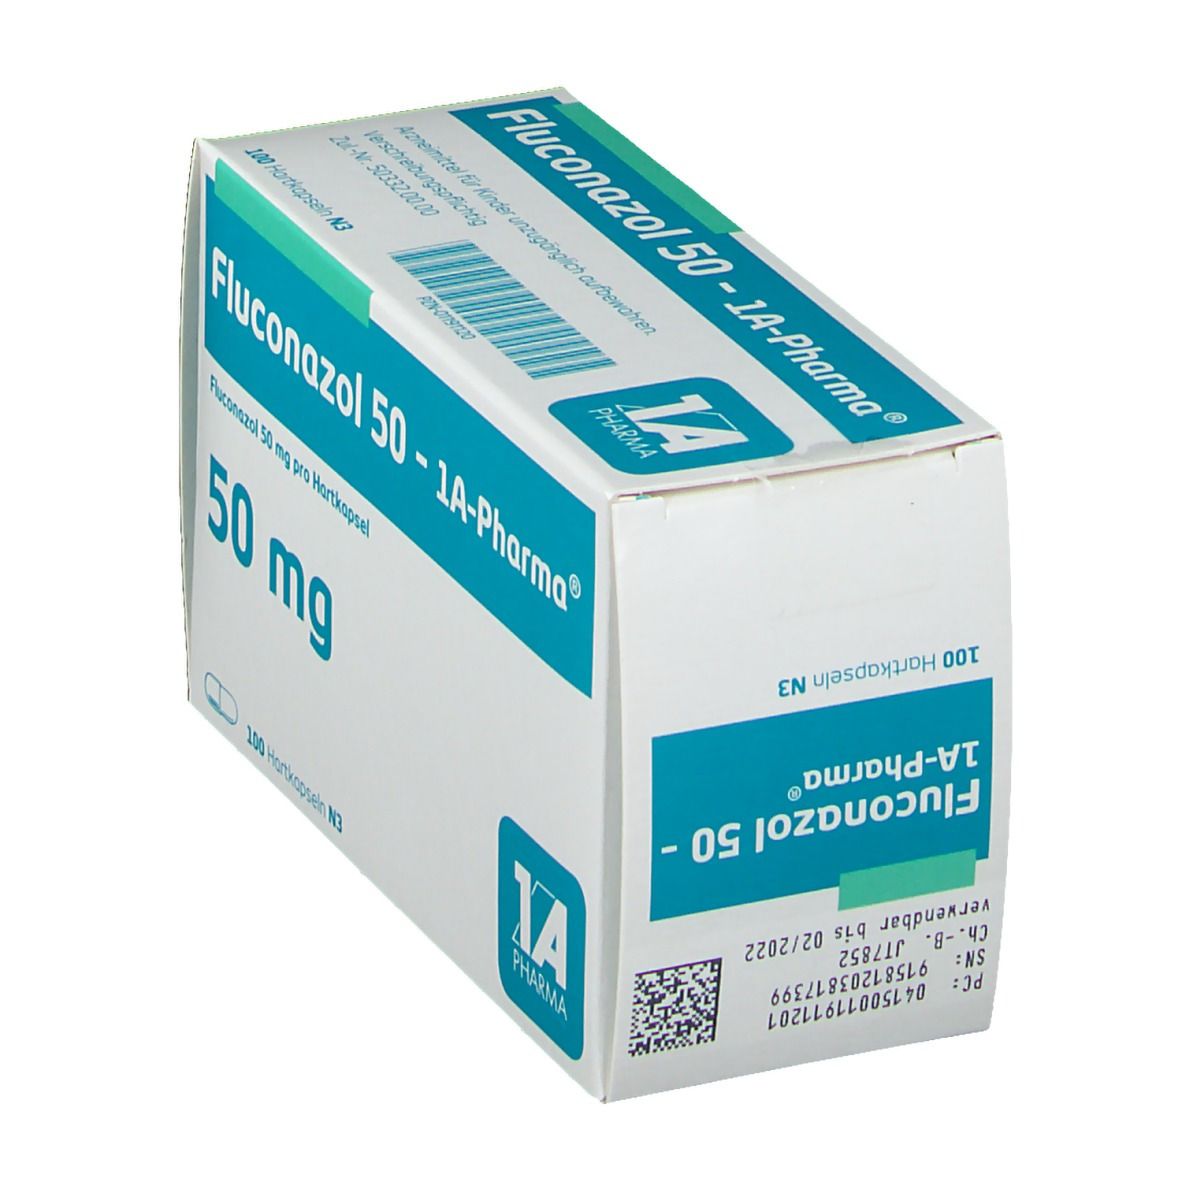 Fluconazol 50 1A Pharma®